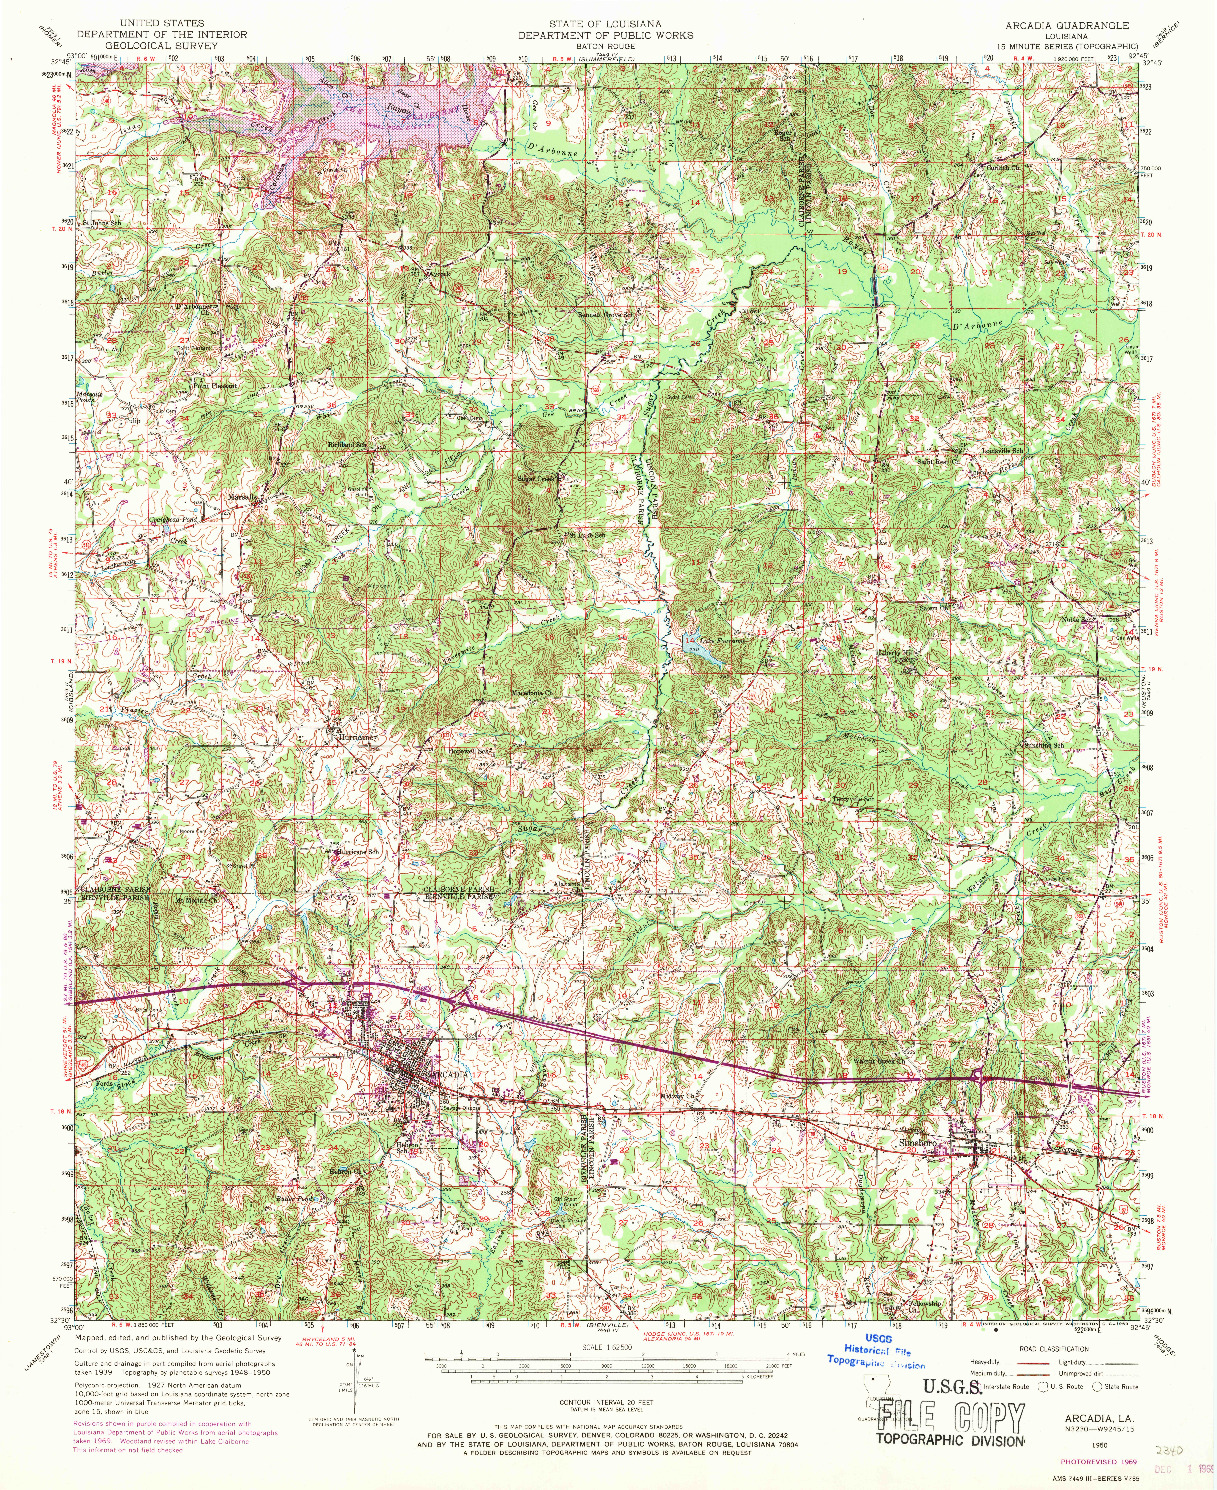 USGS 1:62500-SCALE QUADRANGLE FOR ARCADIA, LA 1950